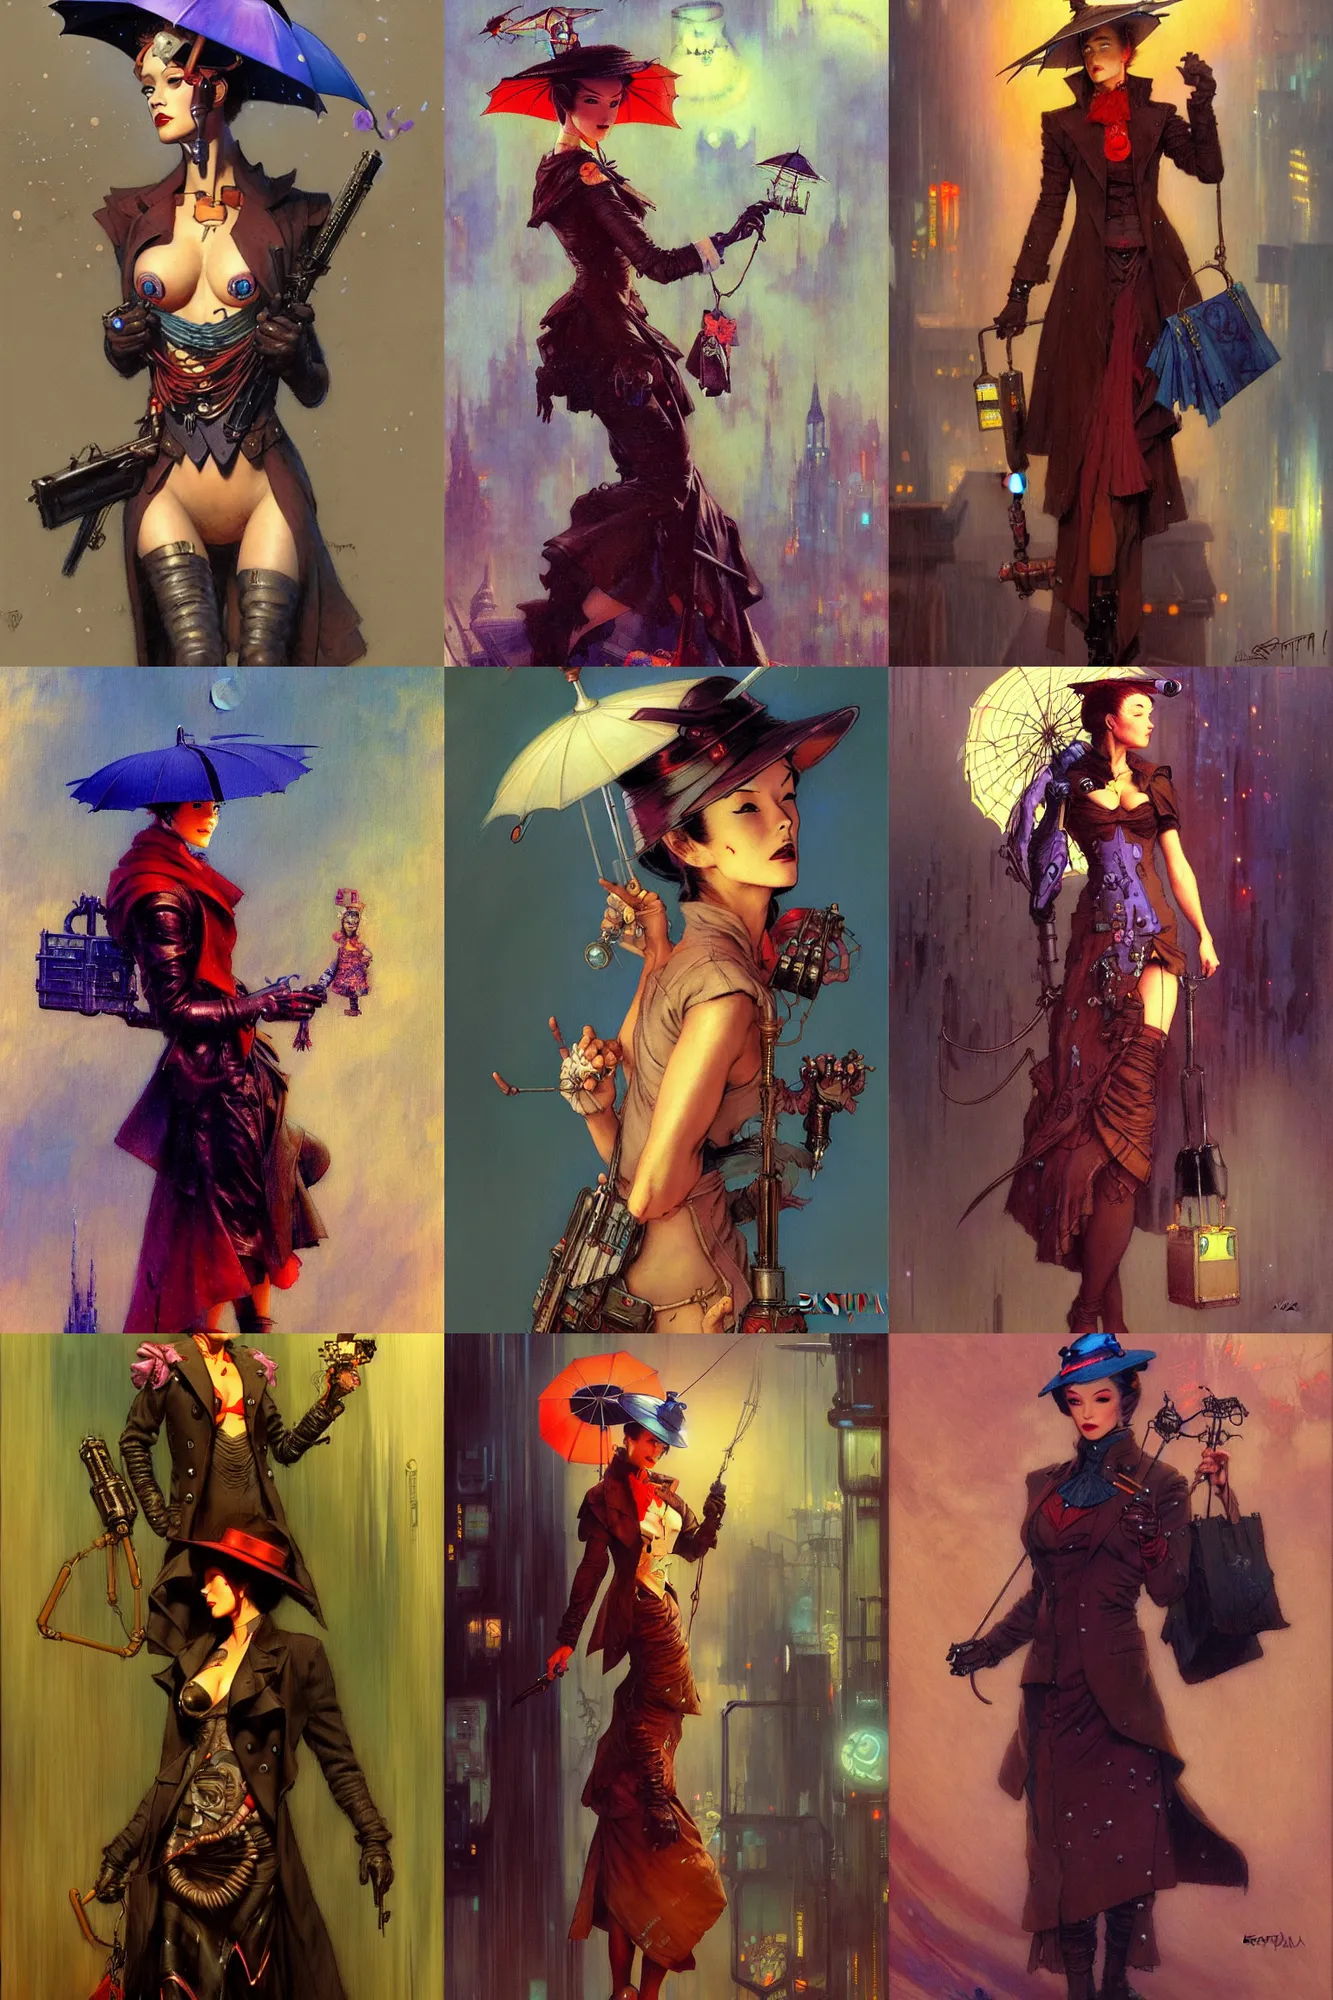 Prompt: cyberpunk mary poppins, character design, painting by gaston bussiere, katsuya terada, frank frazetta, tom of finland, trending on artstation